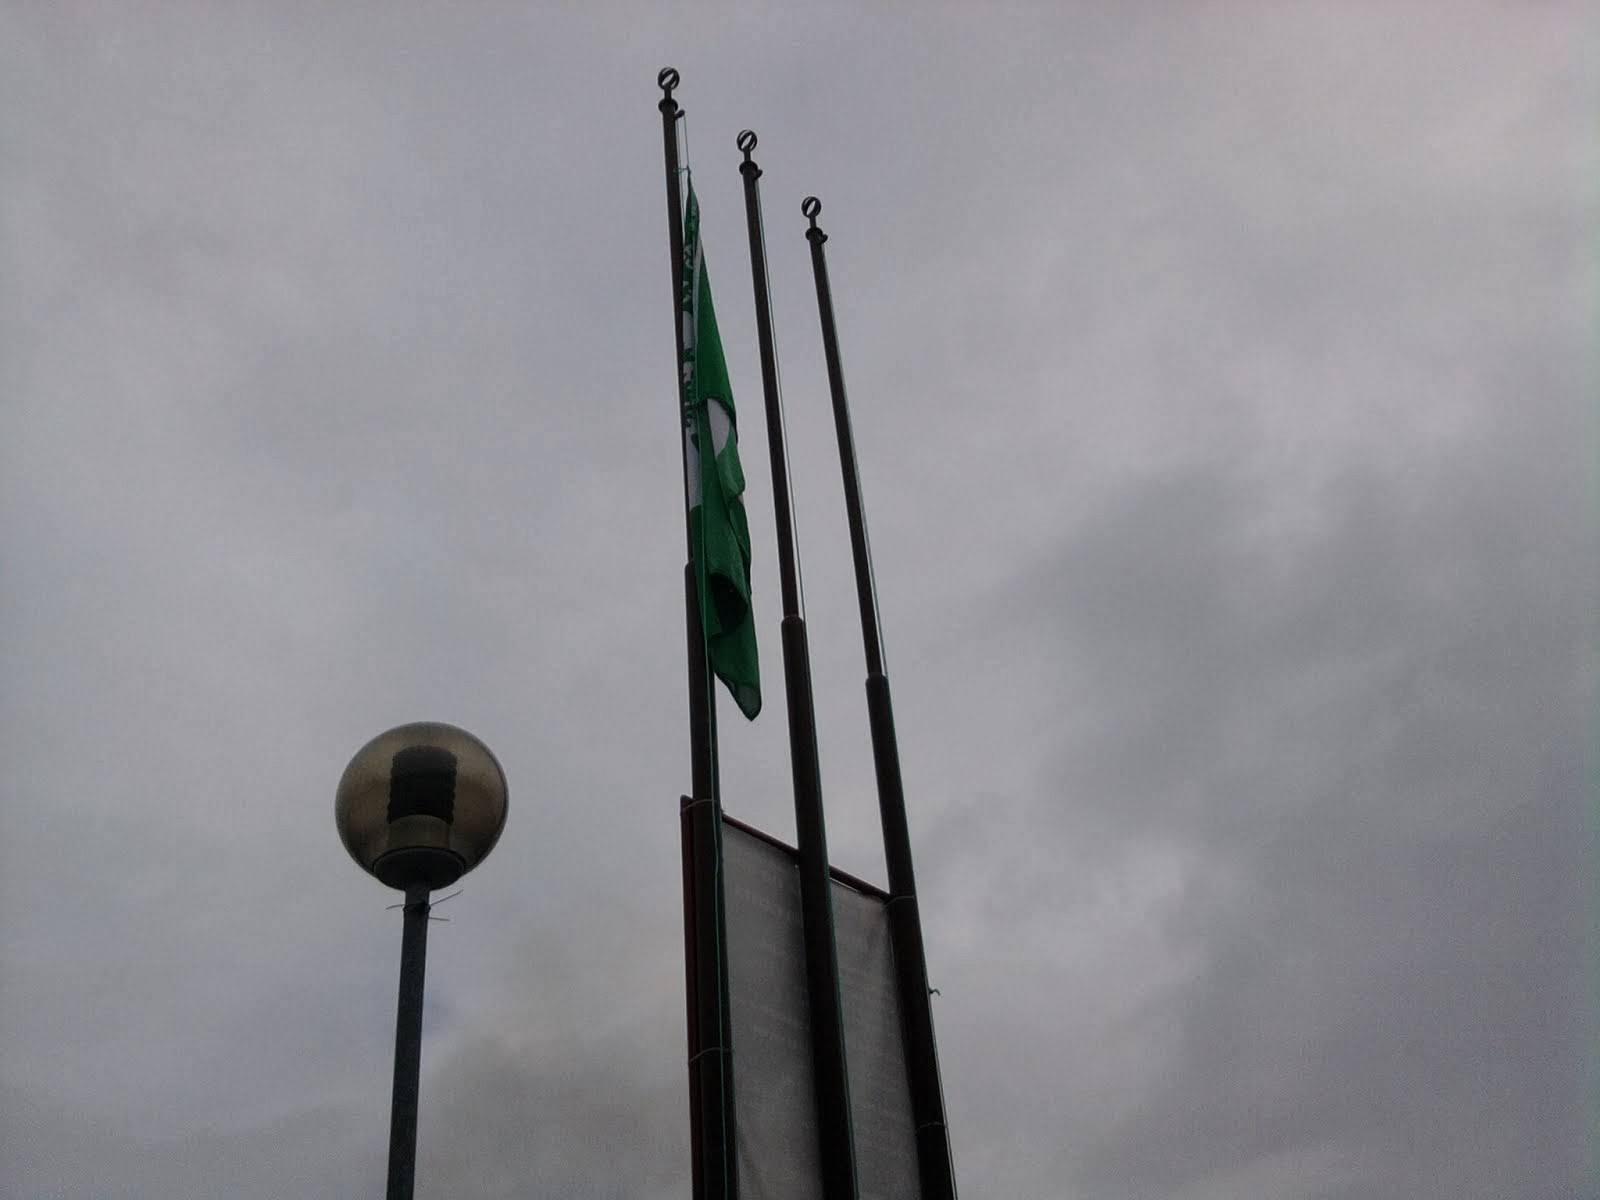 Haster da Bandeira Verde ECO-ESCOLAS